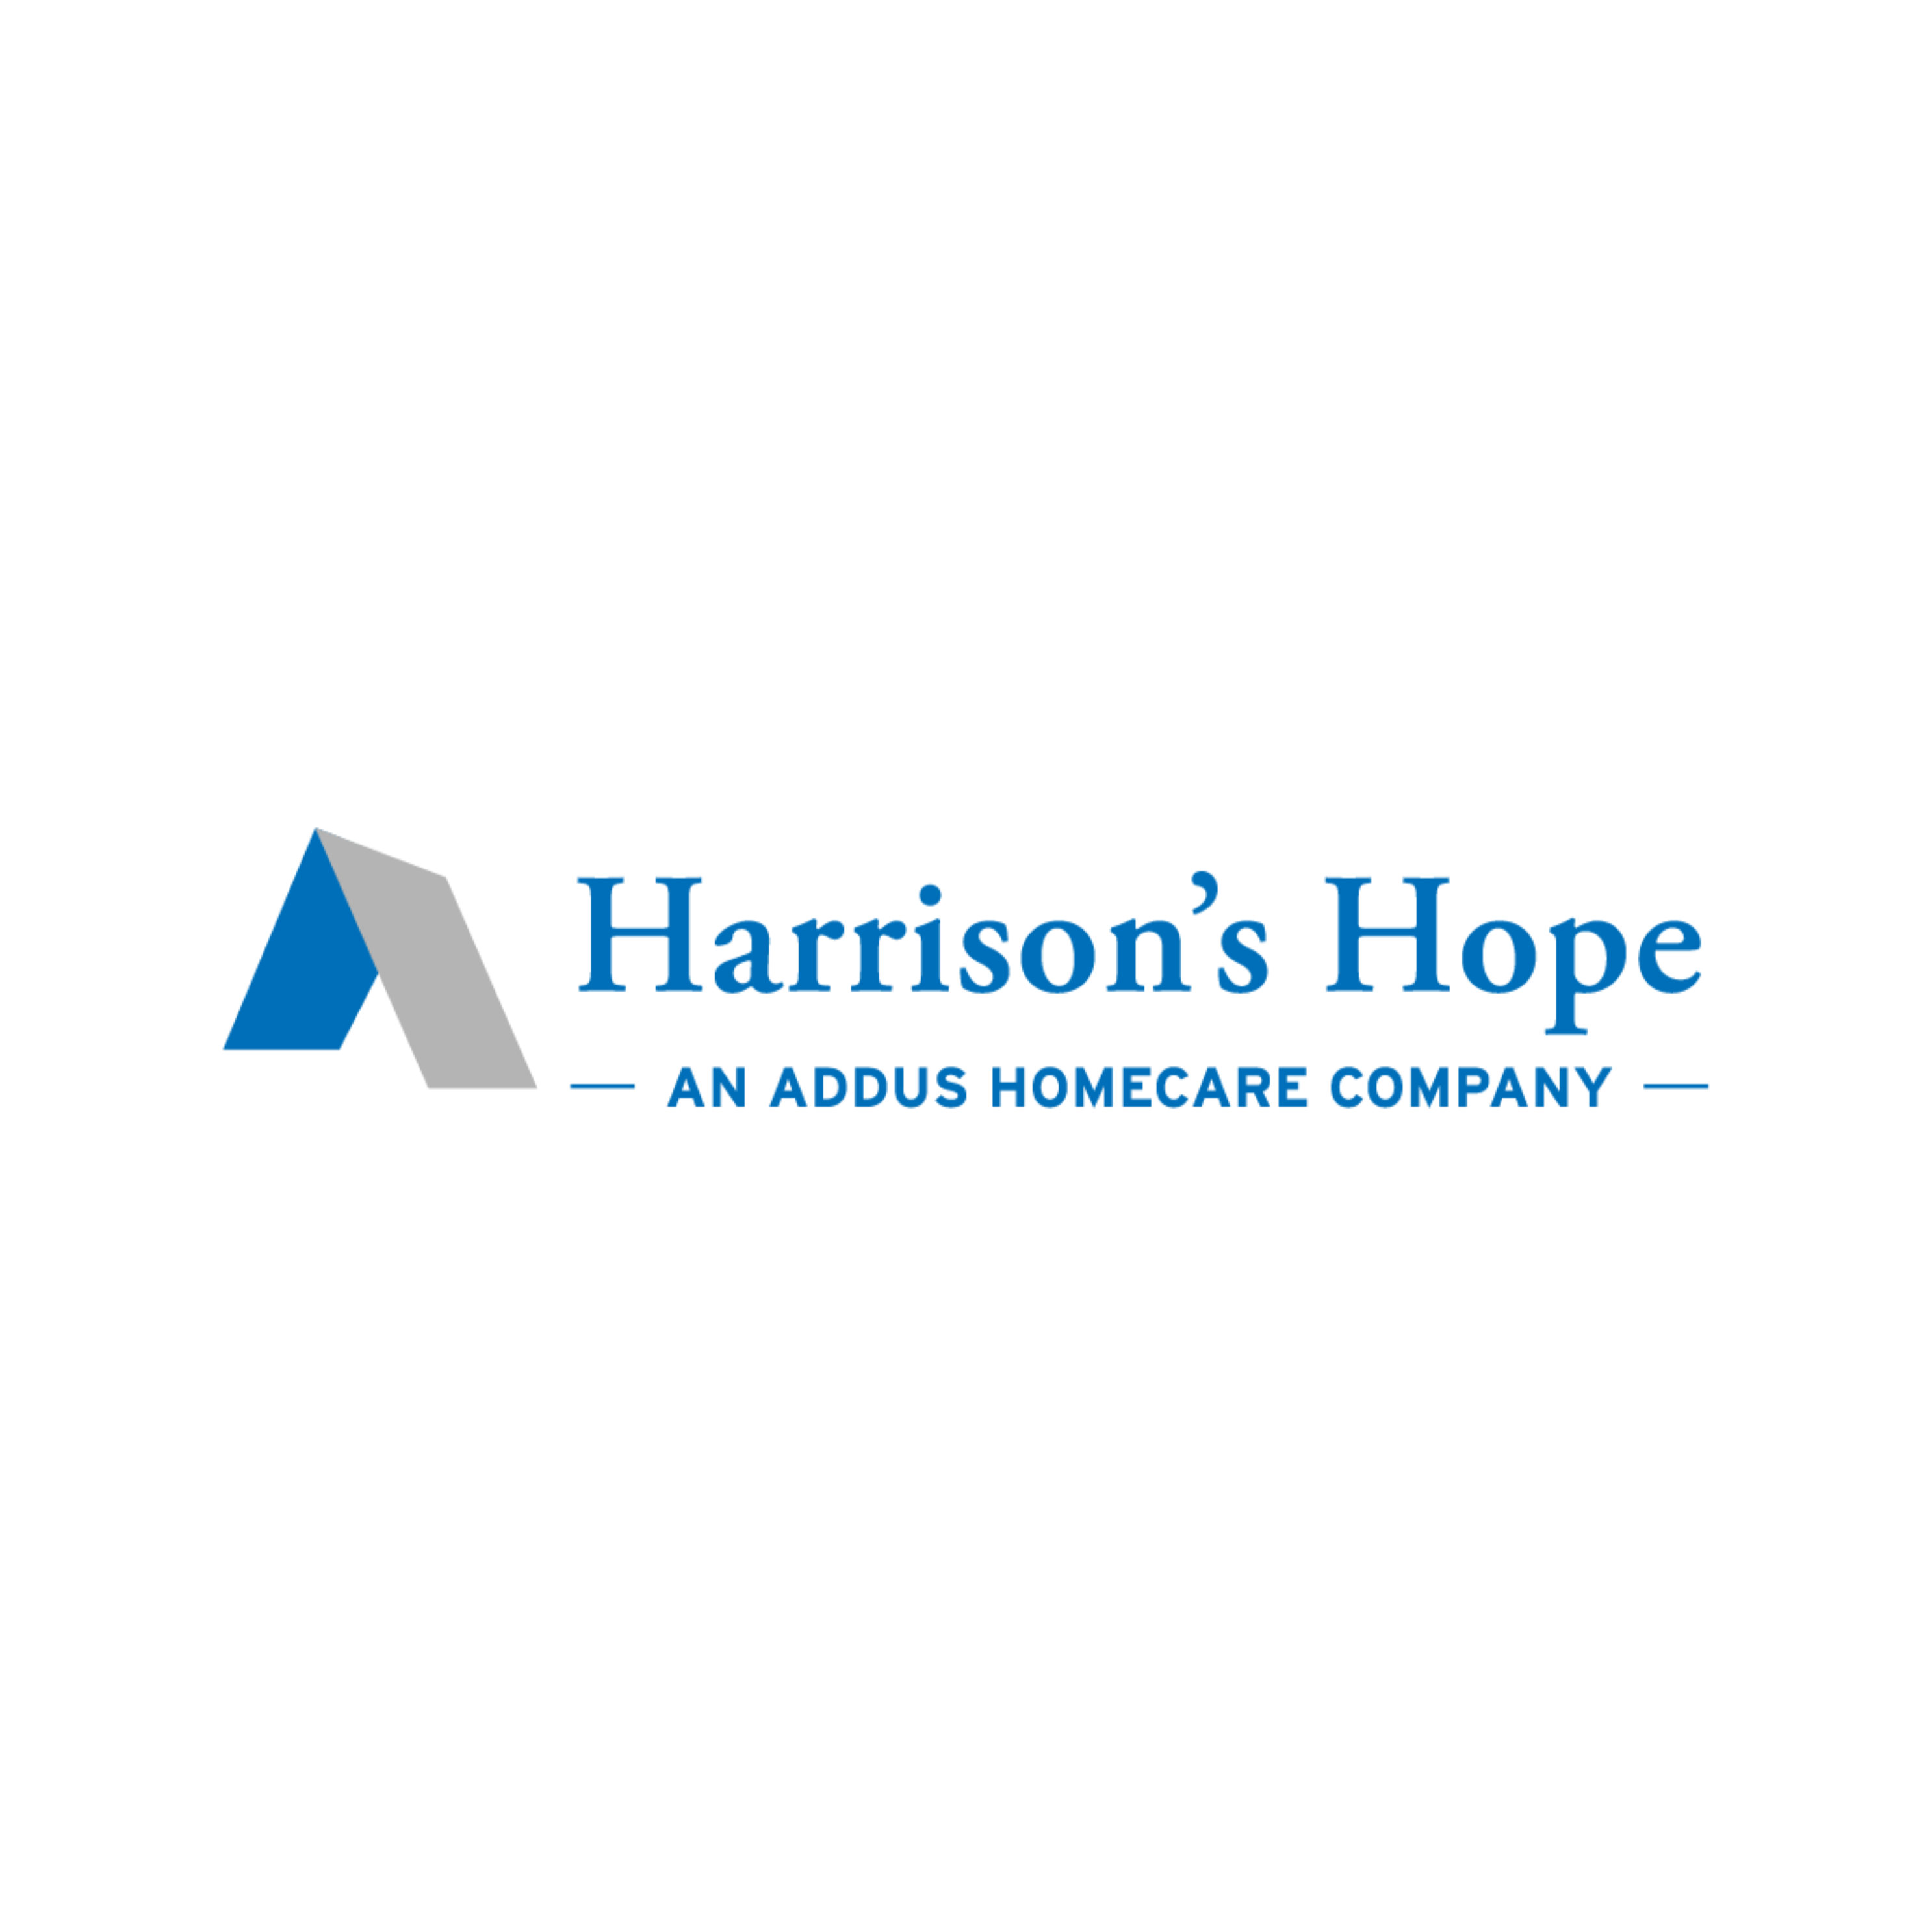 Harrison's Hope